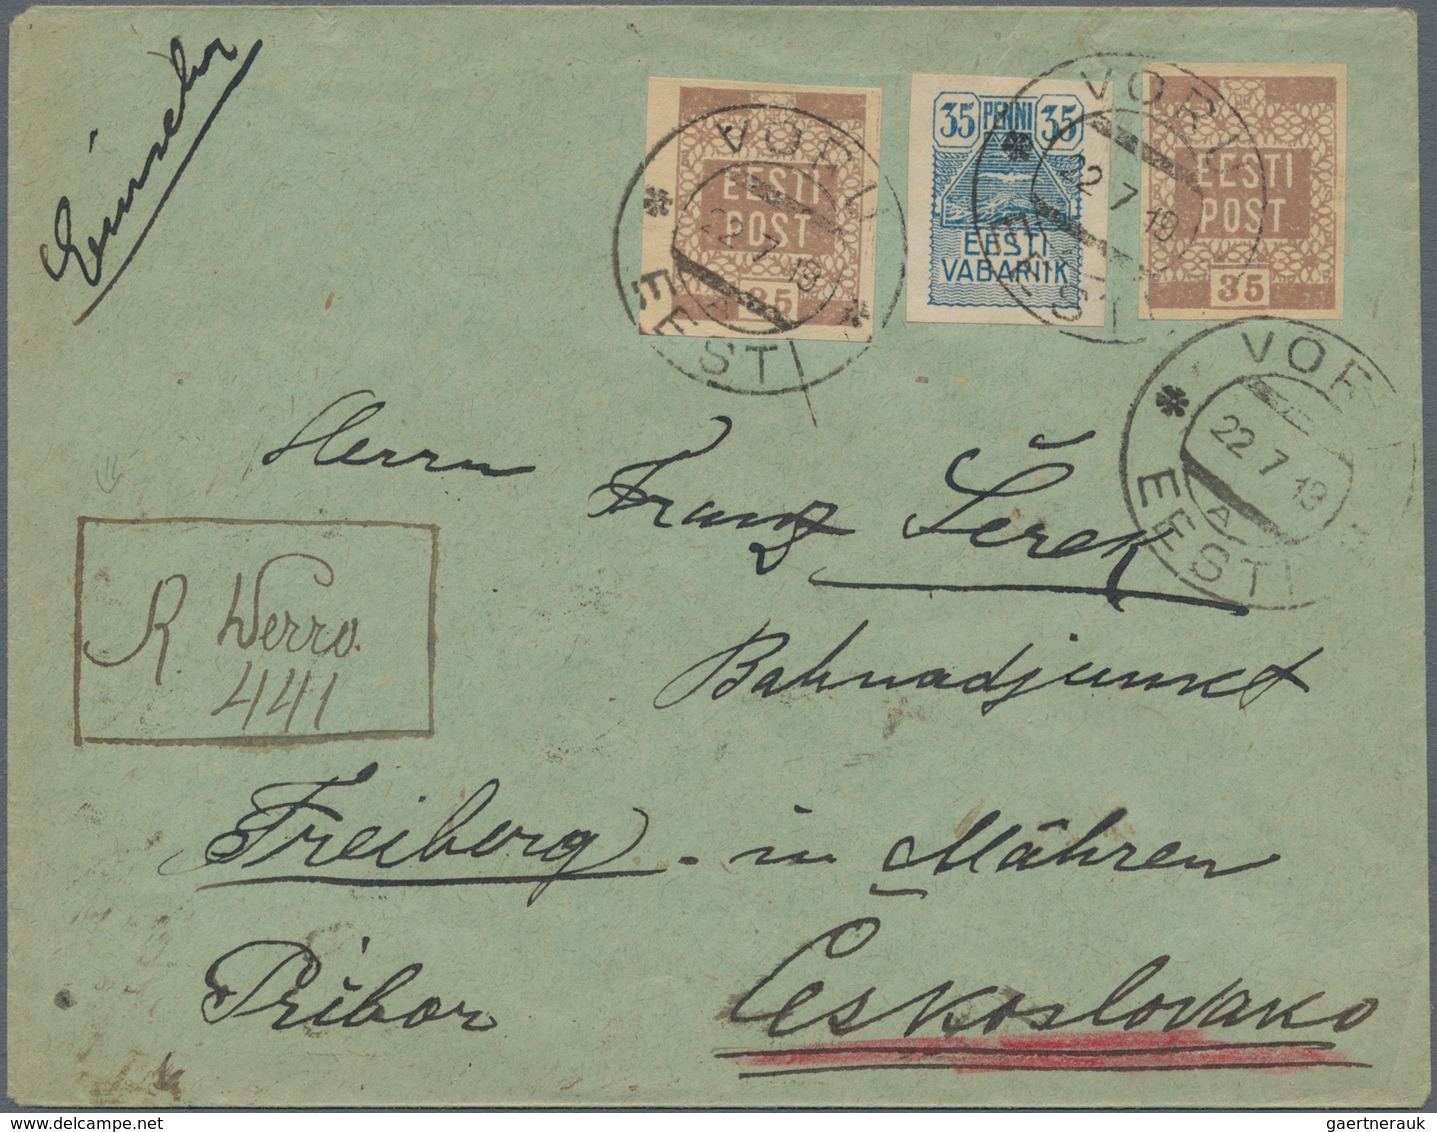 Estland: 1919, R Letter From VÖRU (Werro) To Freiberg (Czechoslovakia), Without Arrival Postmark. - Estland